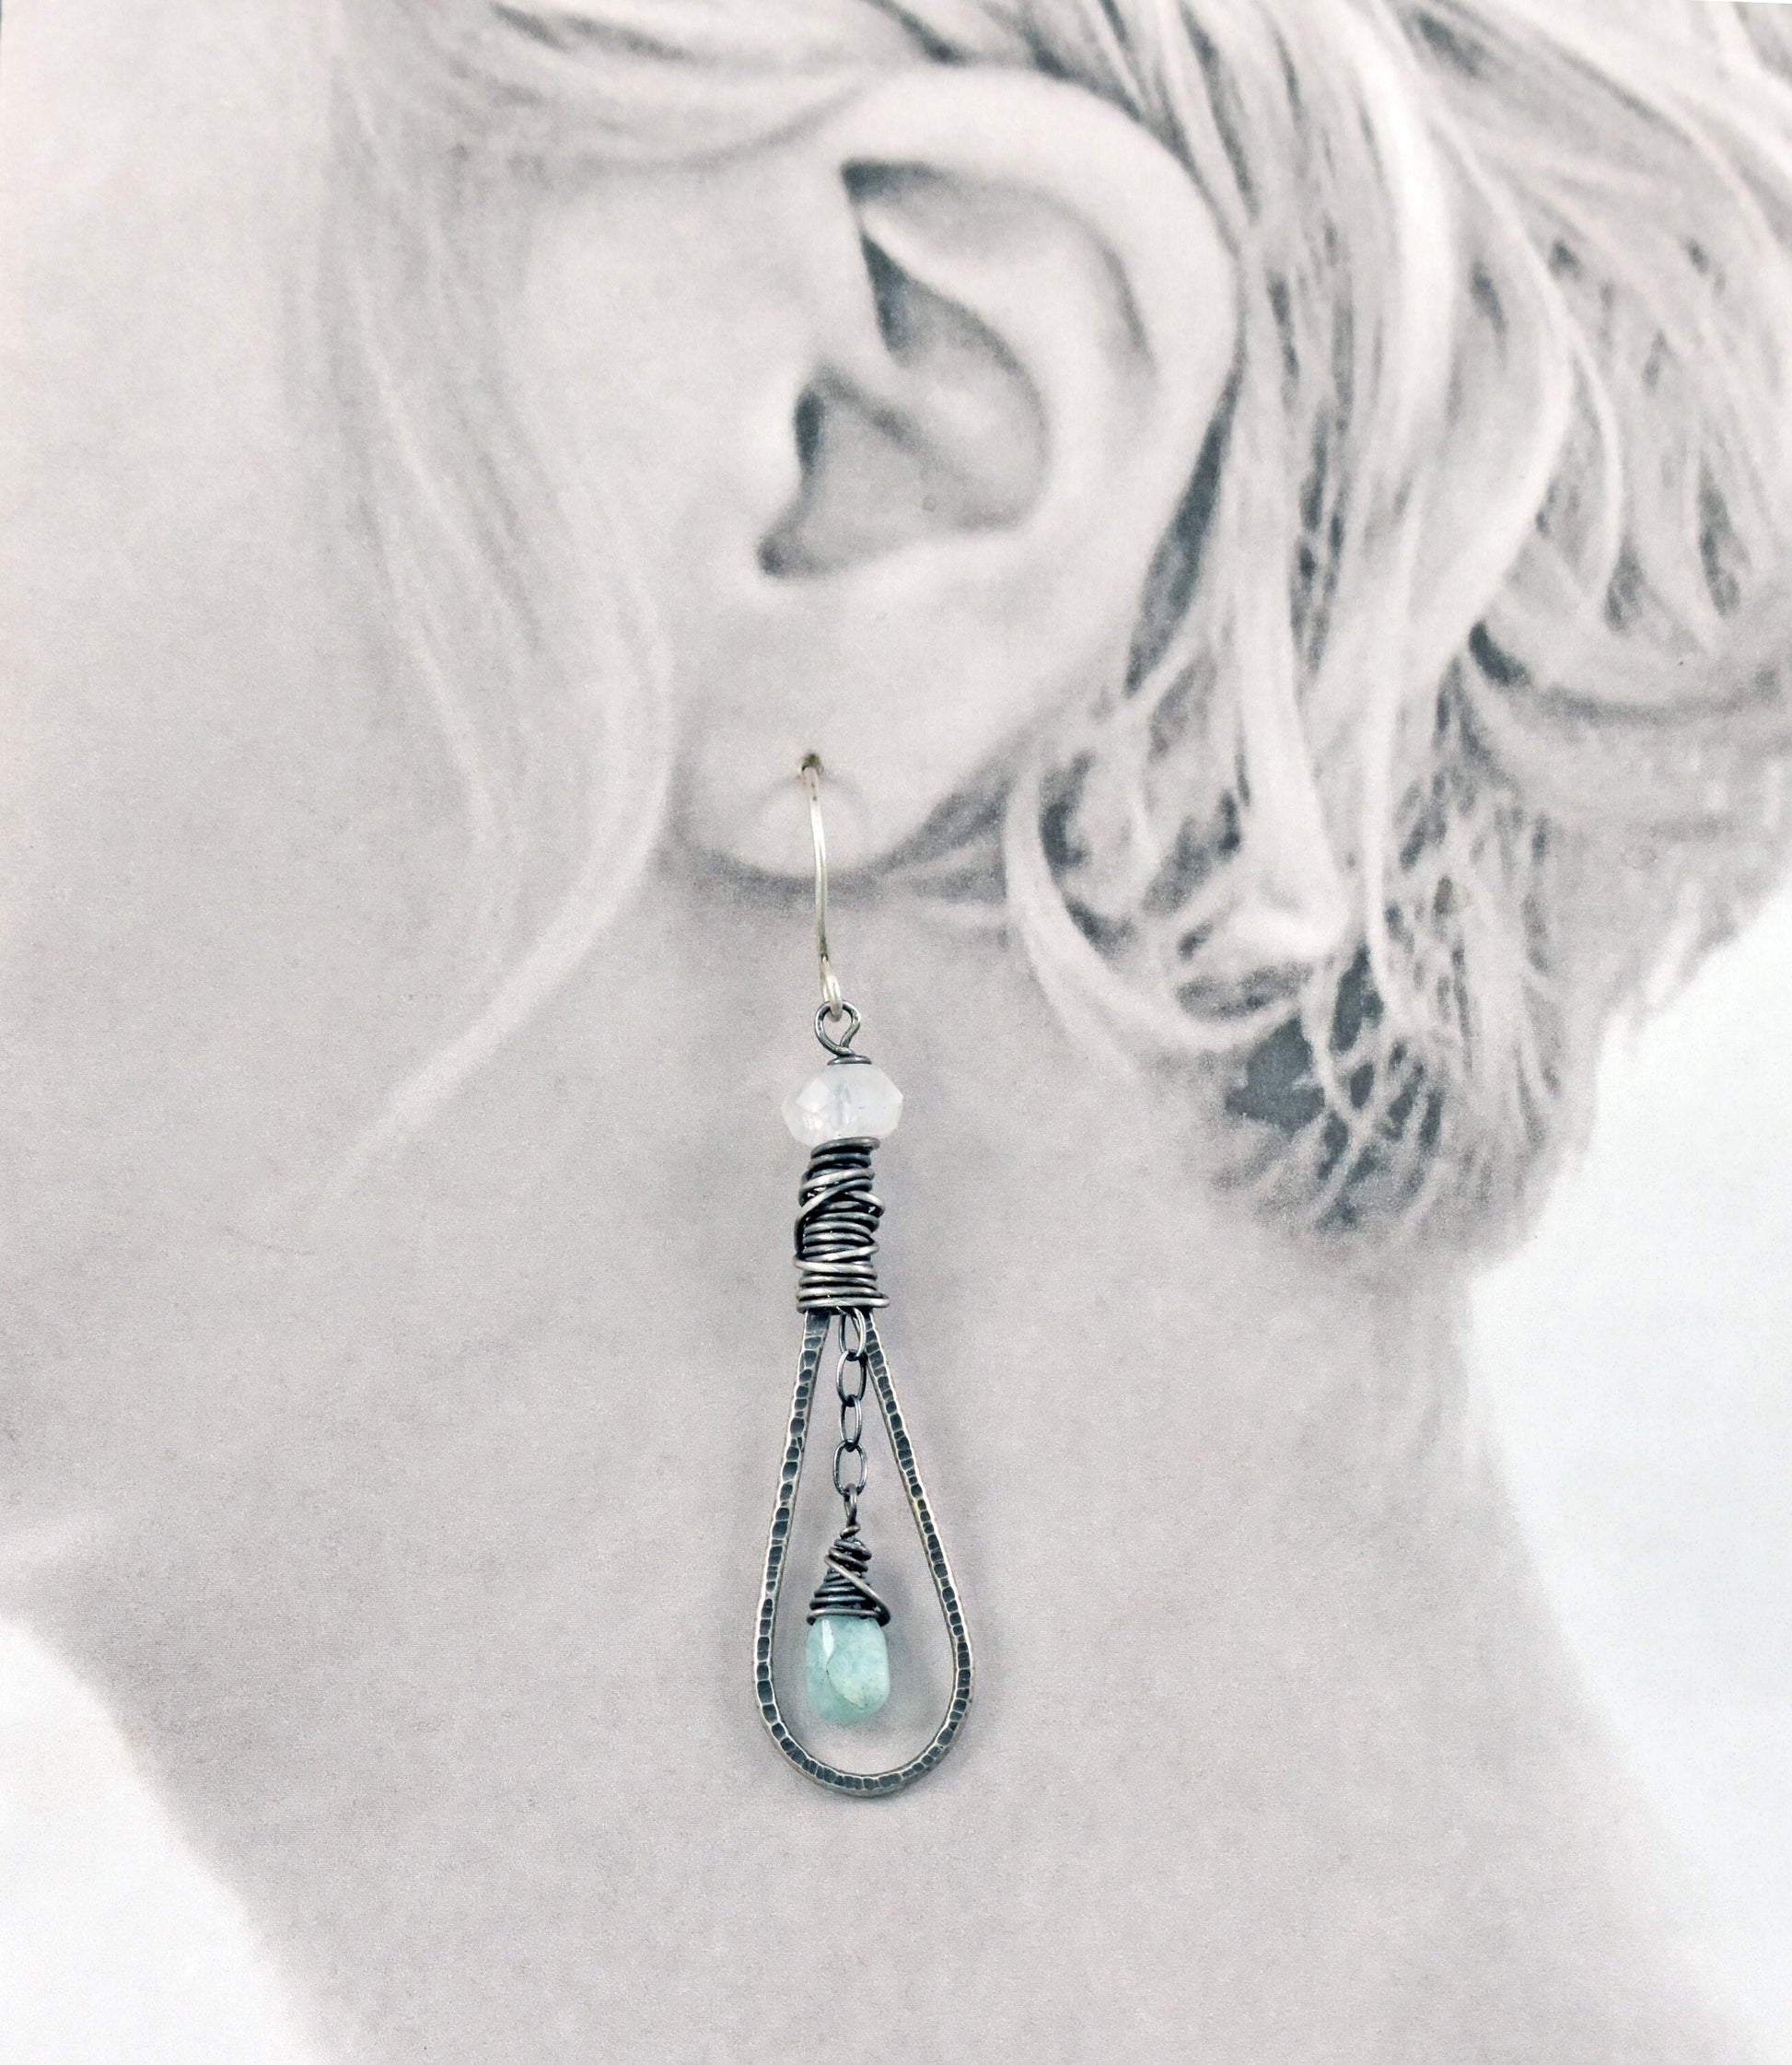 Moonstone Amazonite Sterling Silver Earrings, Light Blue White Gemstone Dangles, Rustic Artisan Wire Teardrop Jewelry Handmade